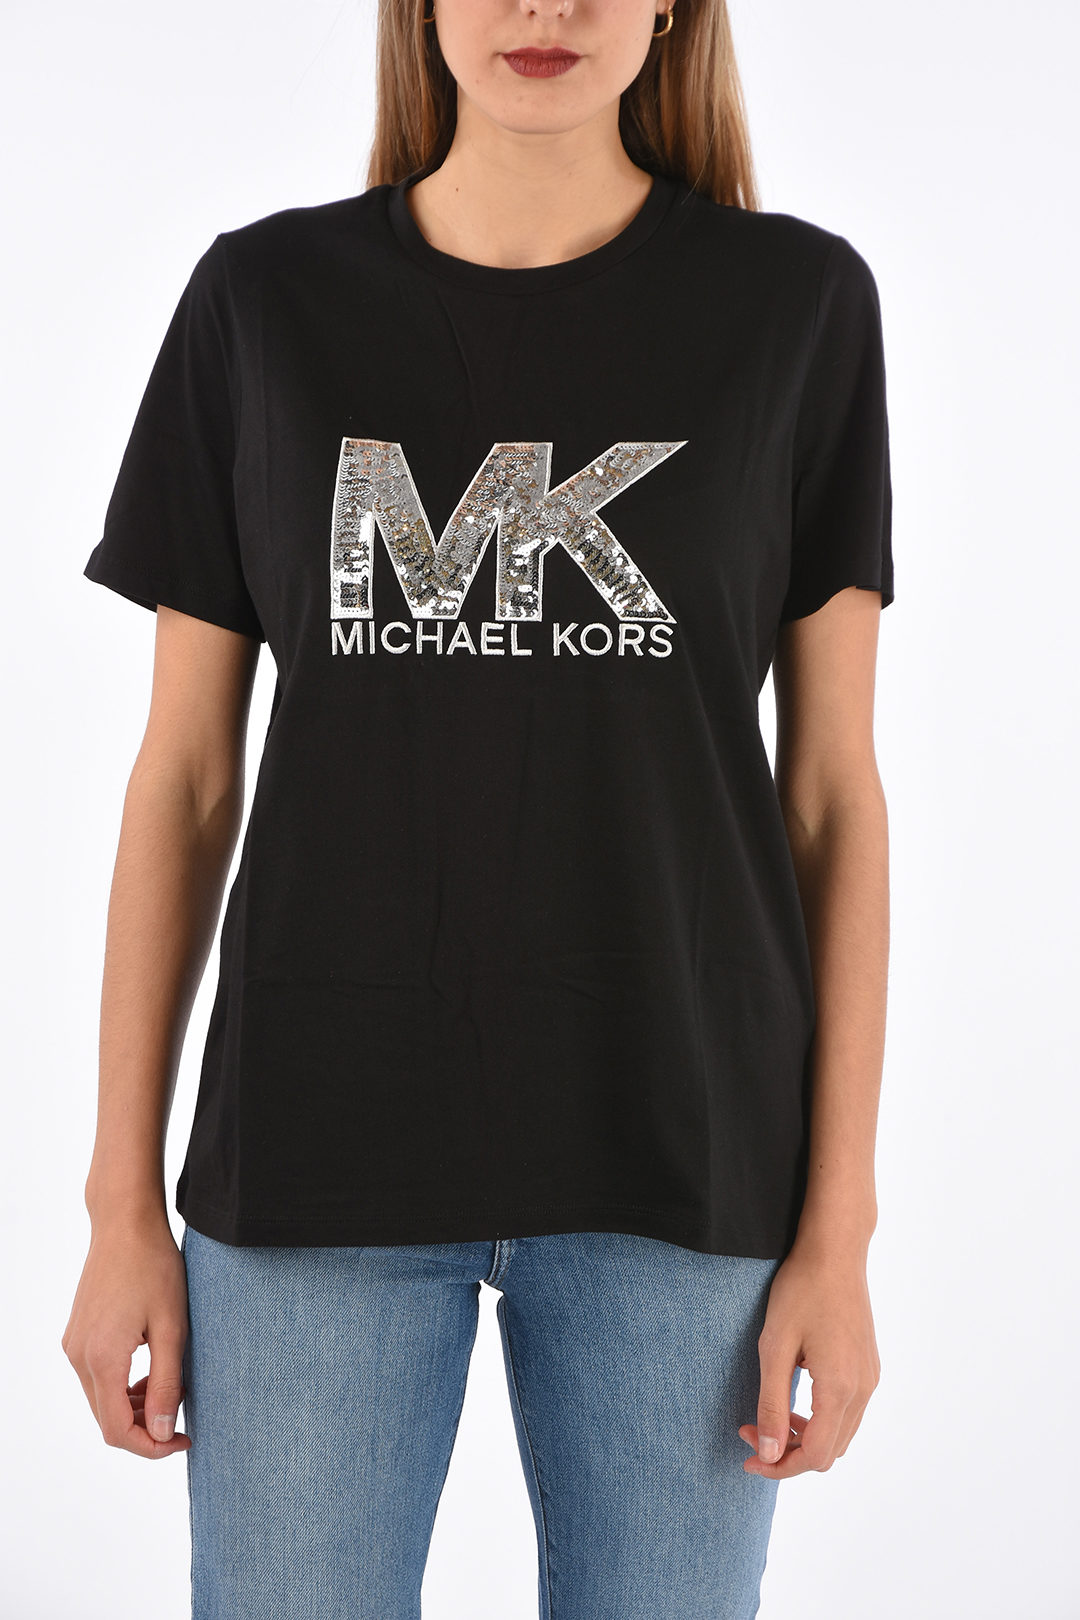 Mens Sweatshirts TShirts and Hoodies  Michael Kors  Michael Kors